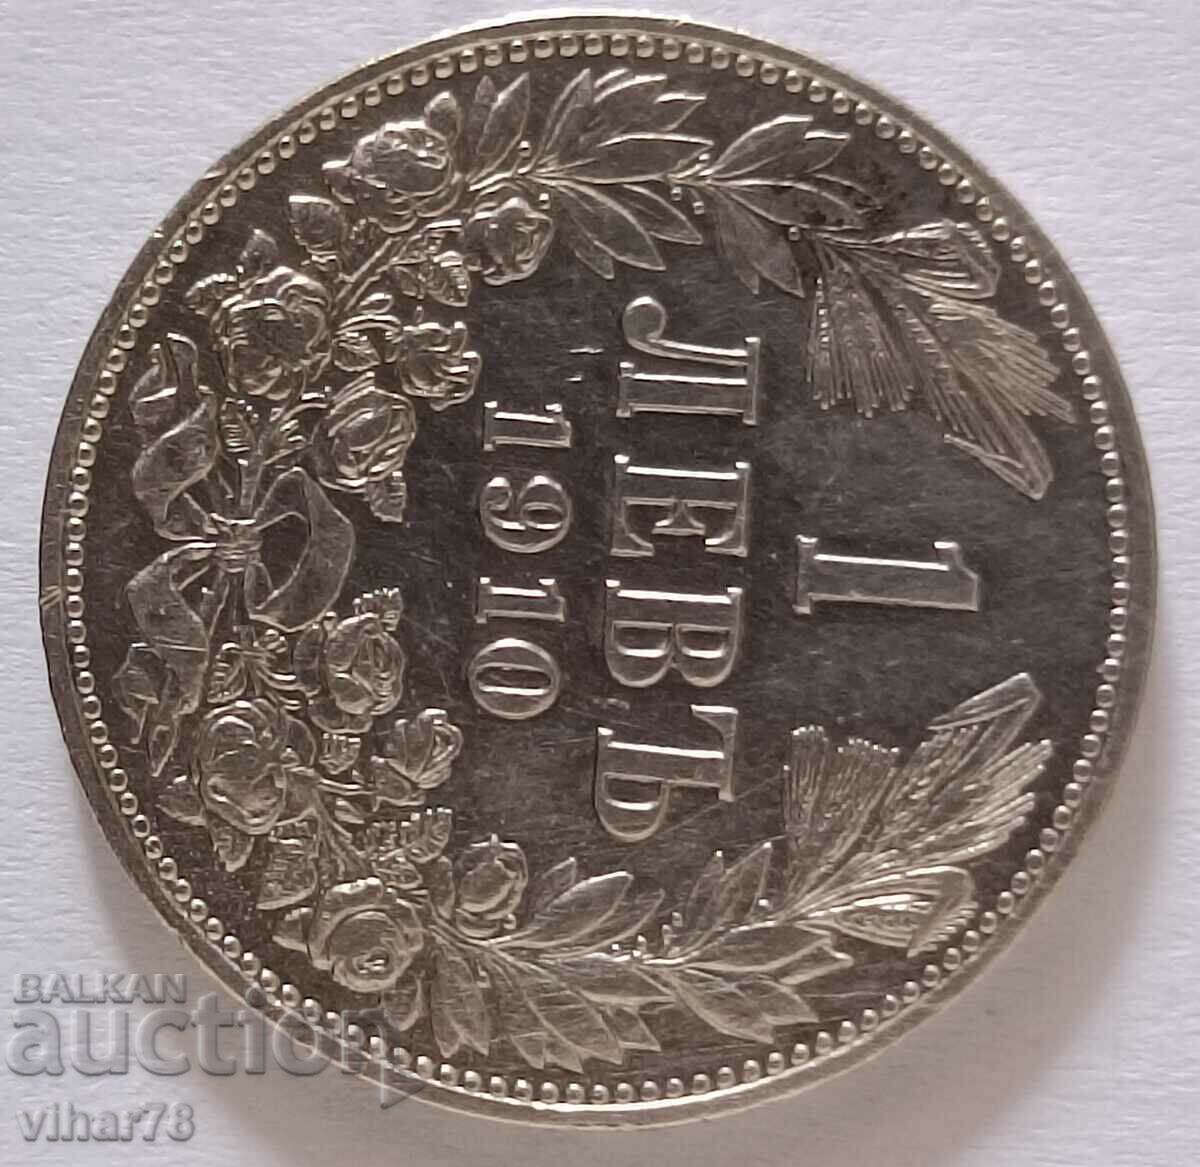 1 BGN 1910 SILVER COIN